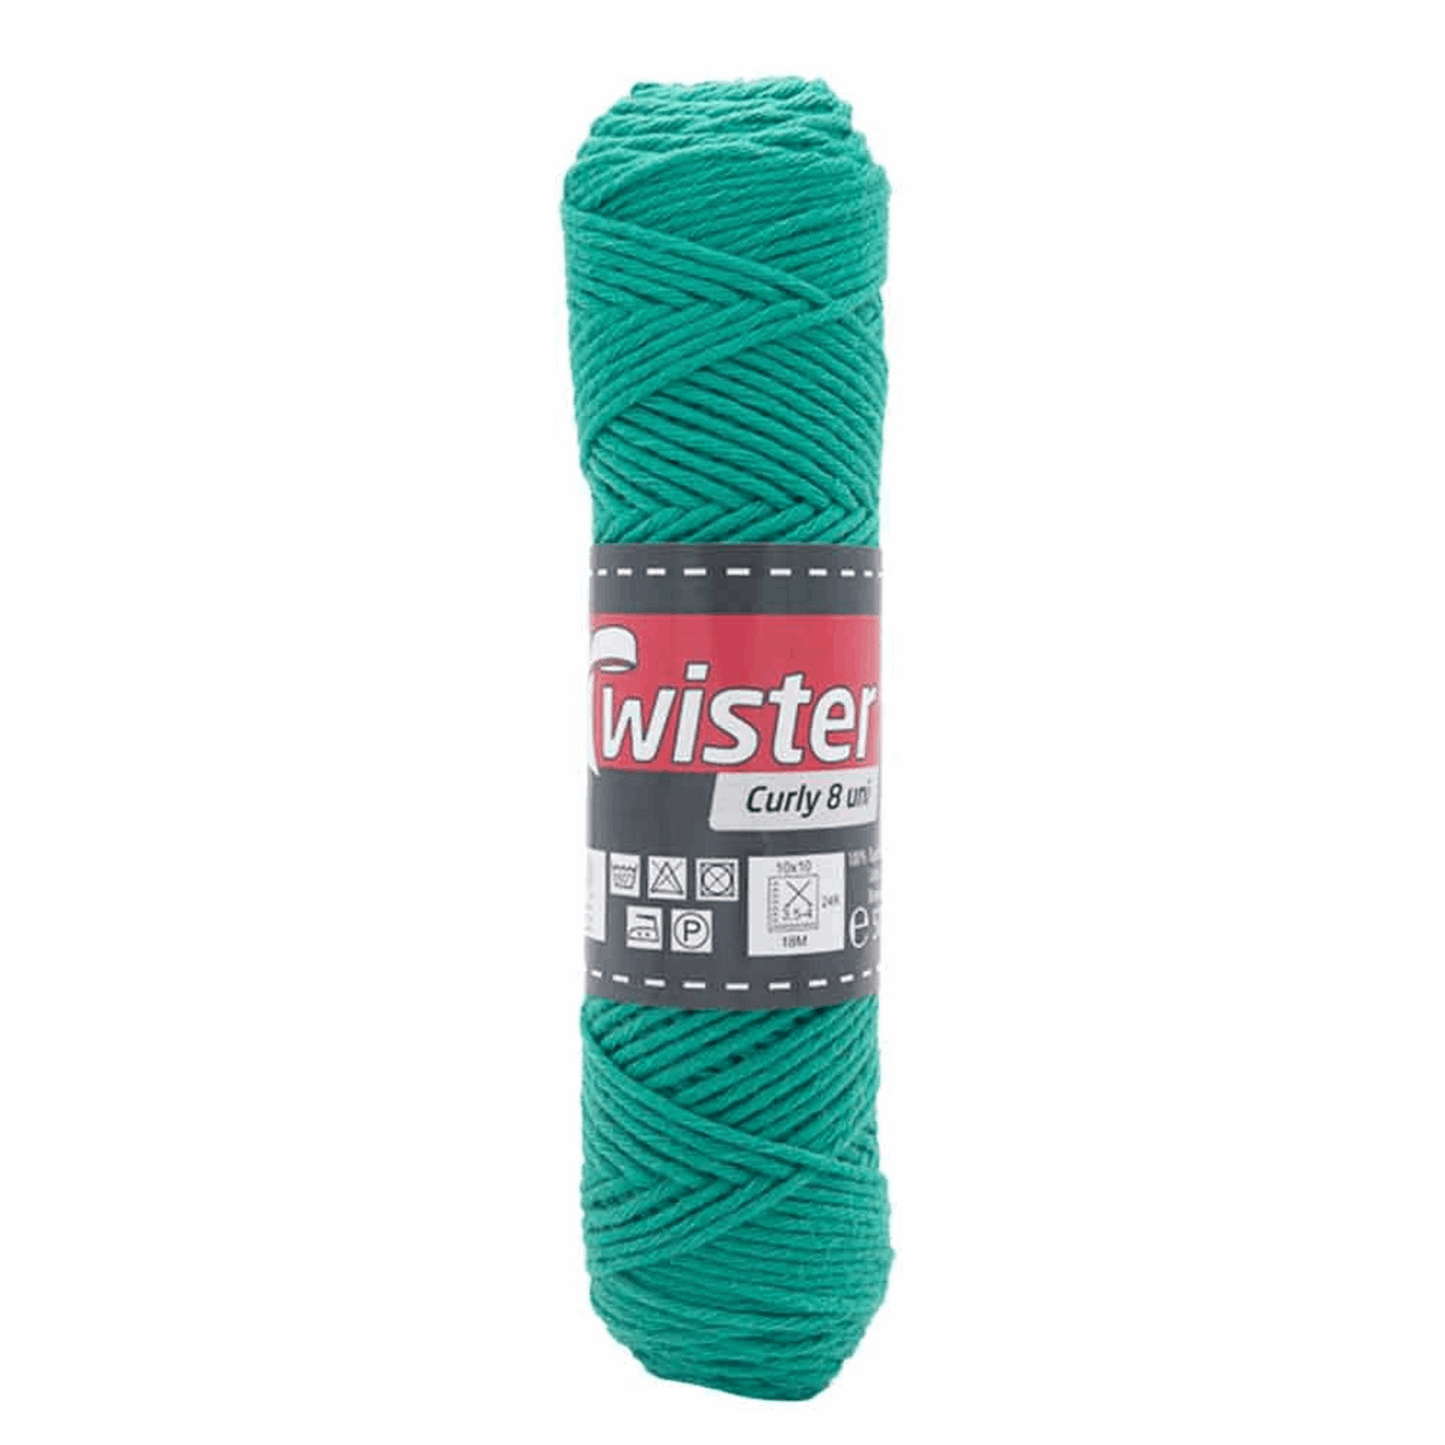 Twister Curly 8 50g, grün, 98302, Farbe 75